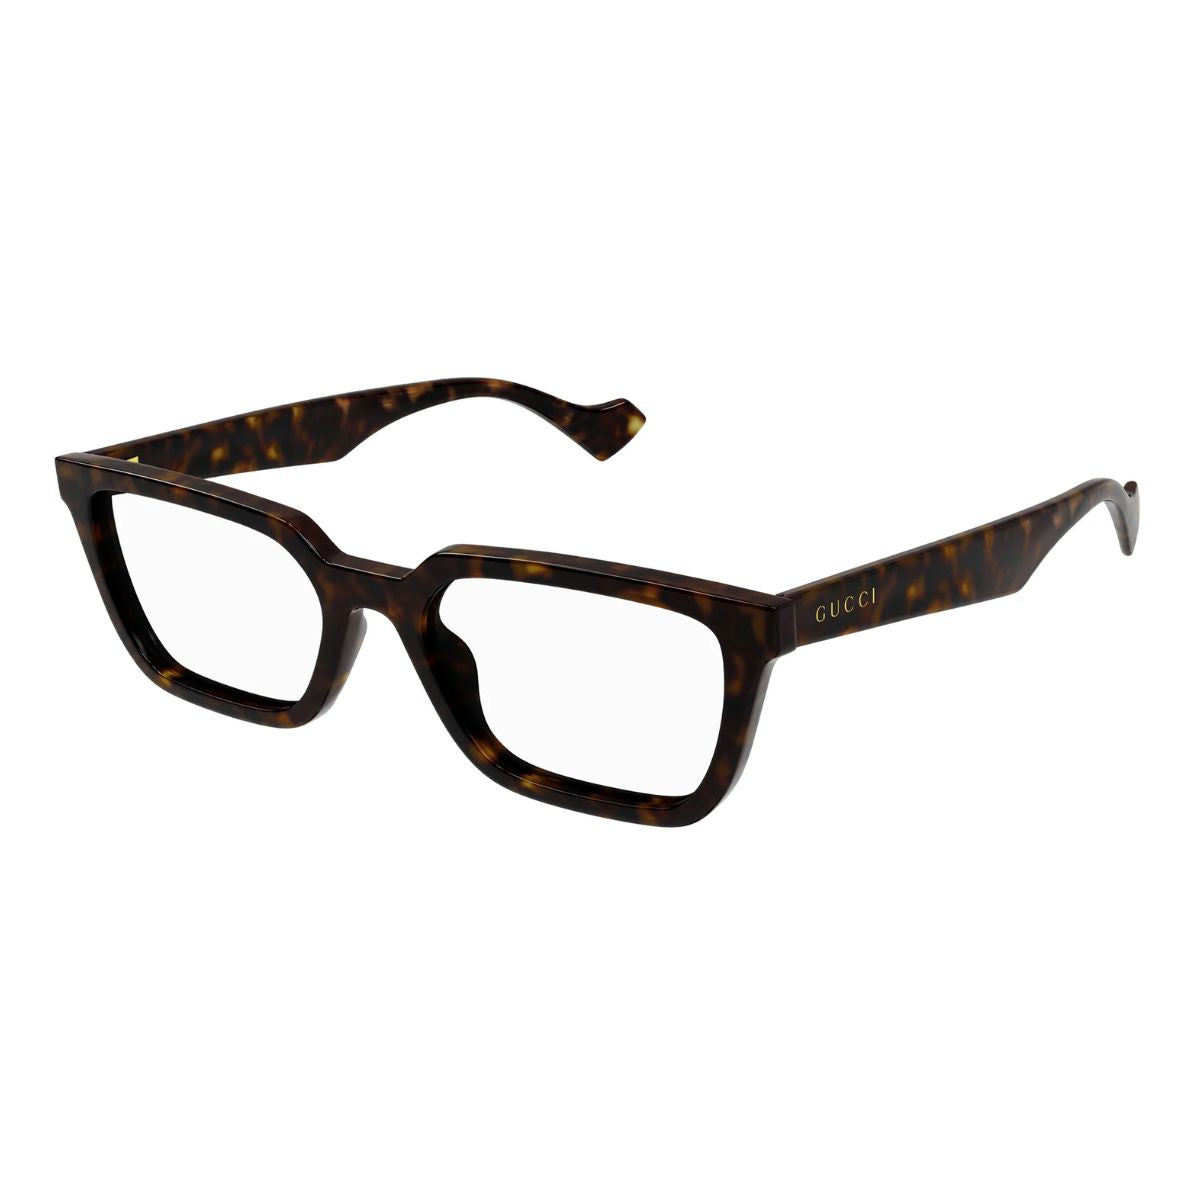 "Classic Gucci 1539O 002 Eyeglasses Frames for Men"